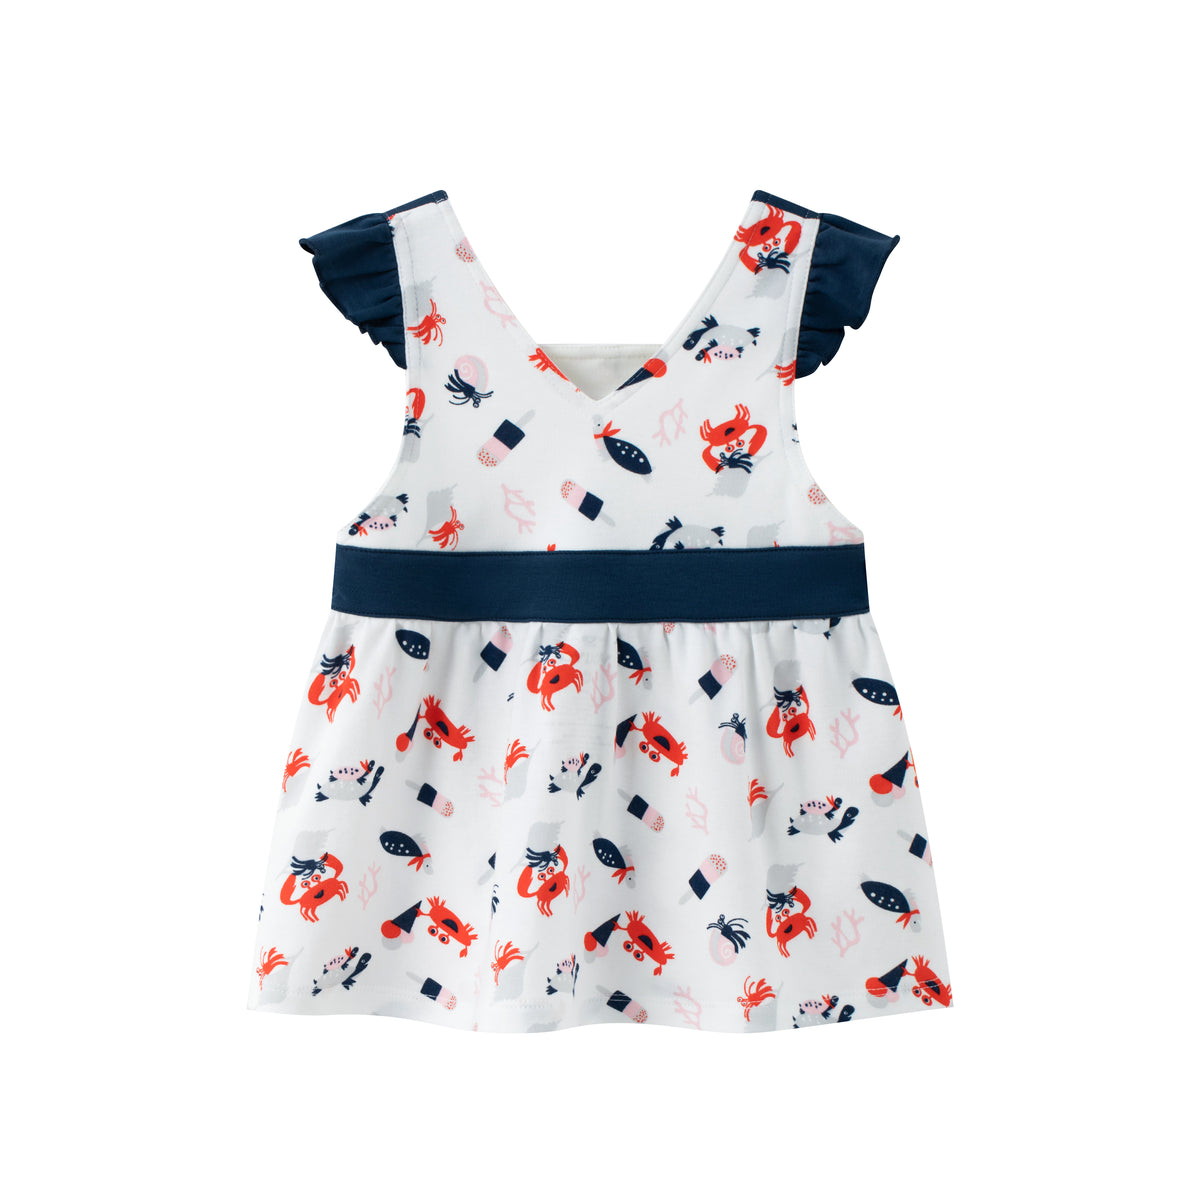 Vauva SS24 - 女嬰螃蟹印花背心裙 (藍色) 